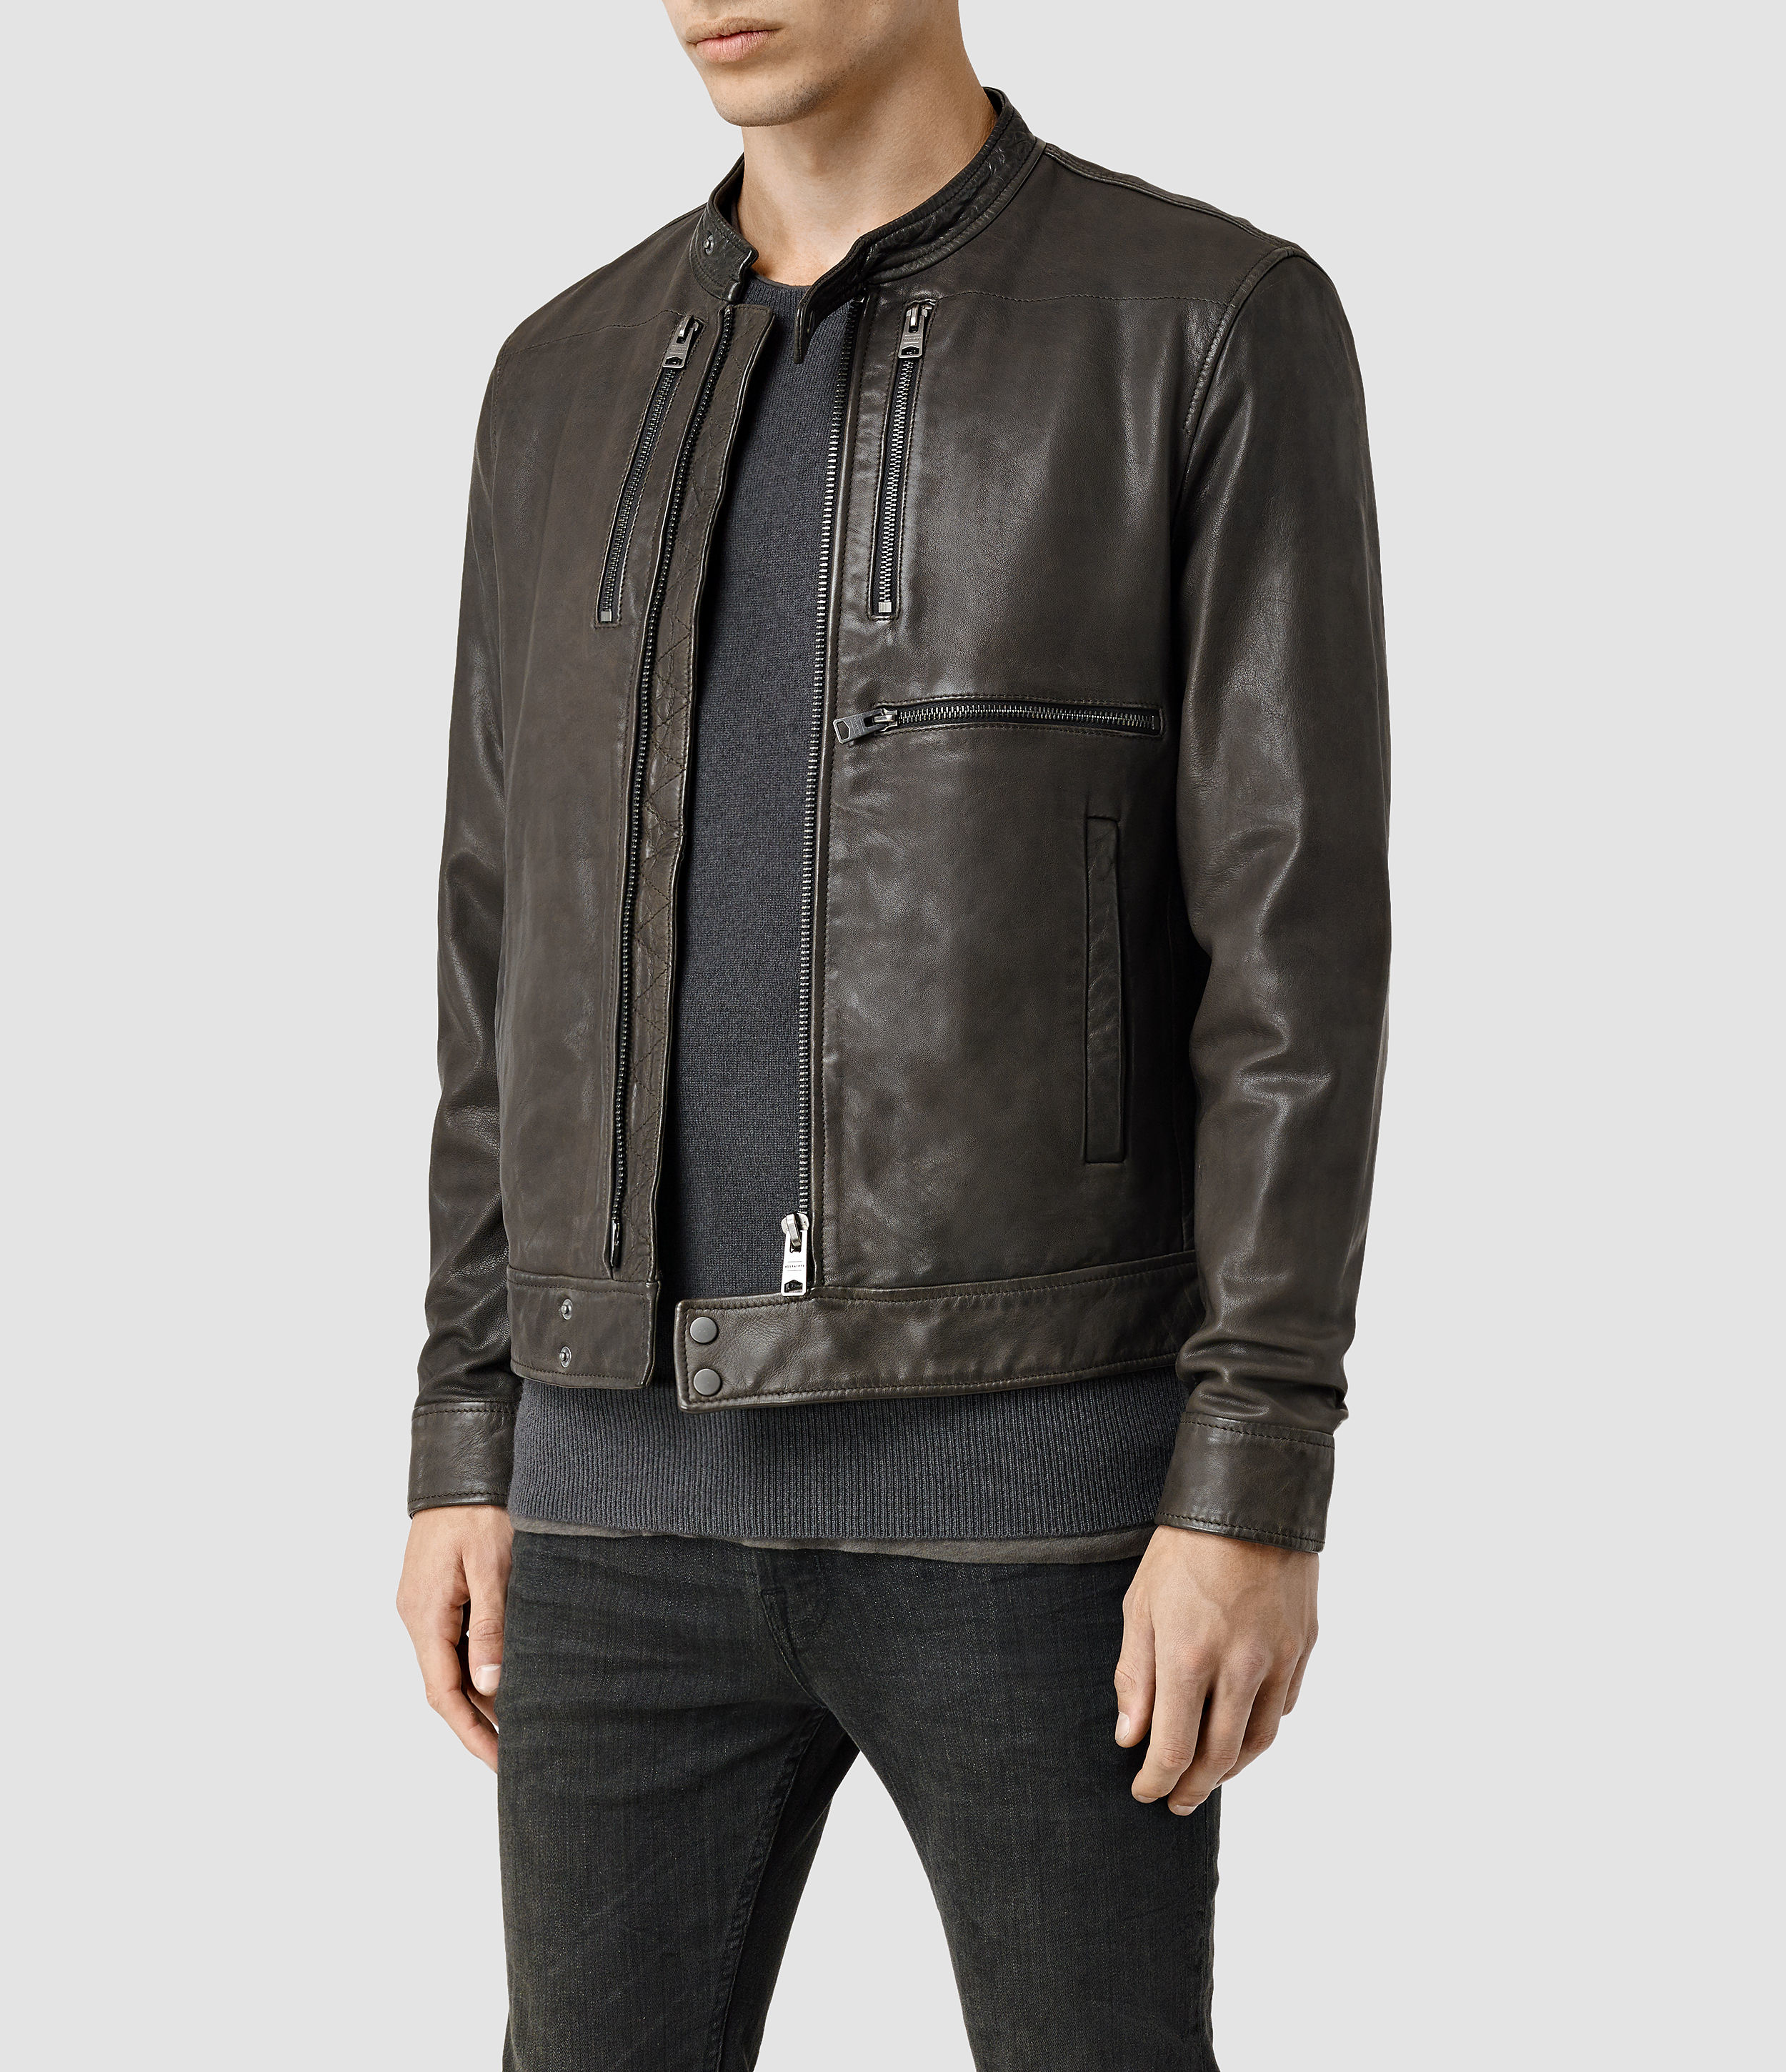 AllSaints Howard Leather Biker Jacket in Anthracite (Brown) for Men - Lyst